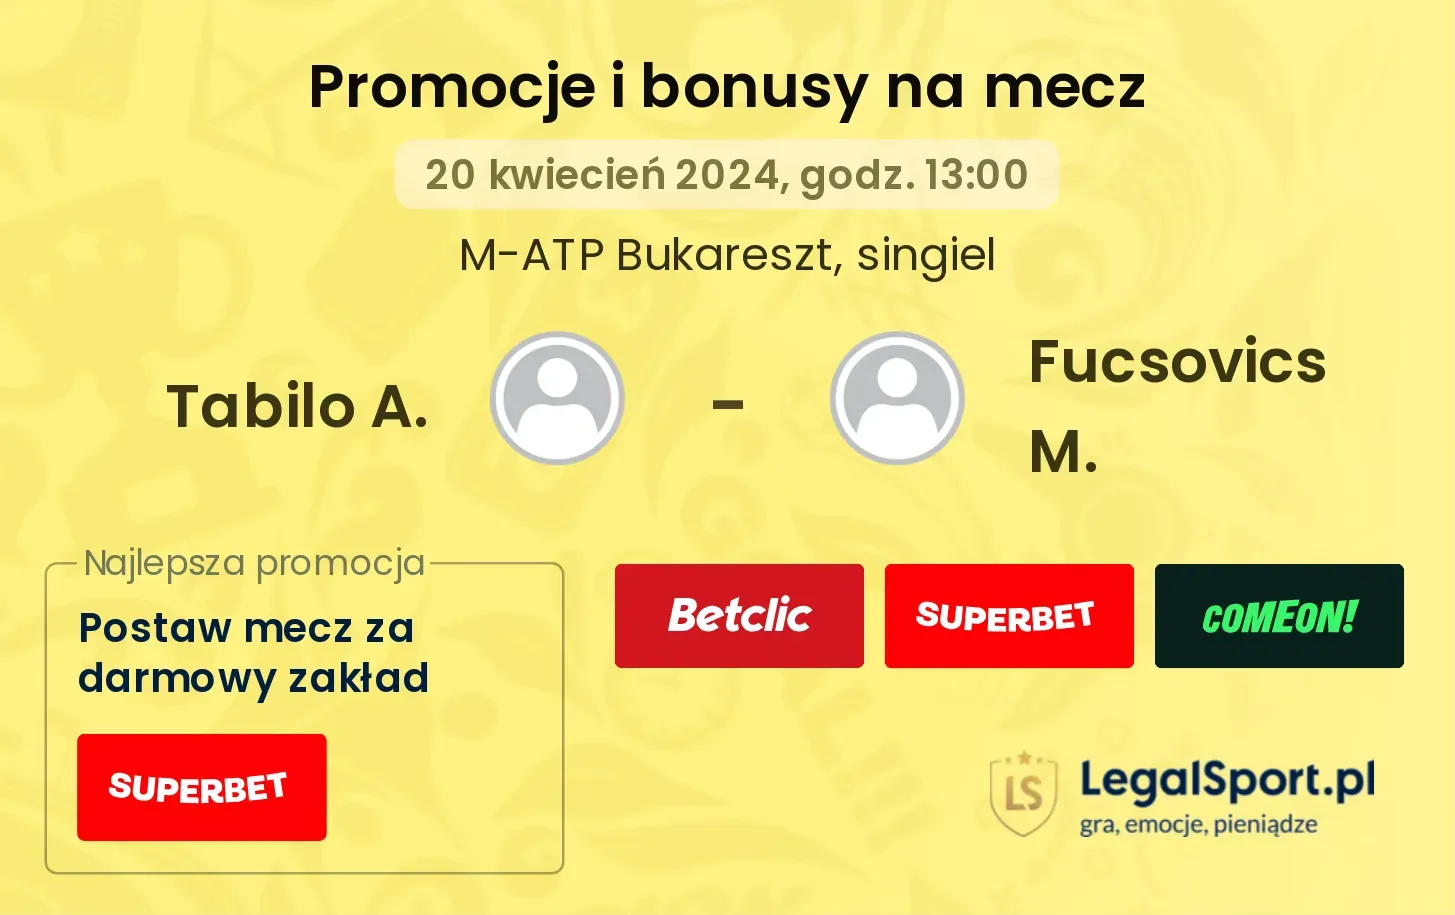 Tabilo A. - Fucsovics M. promocje bonusy na mecz